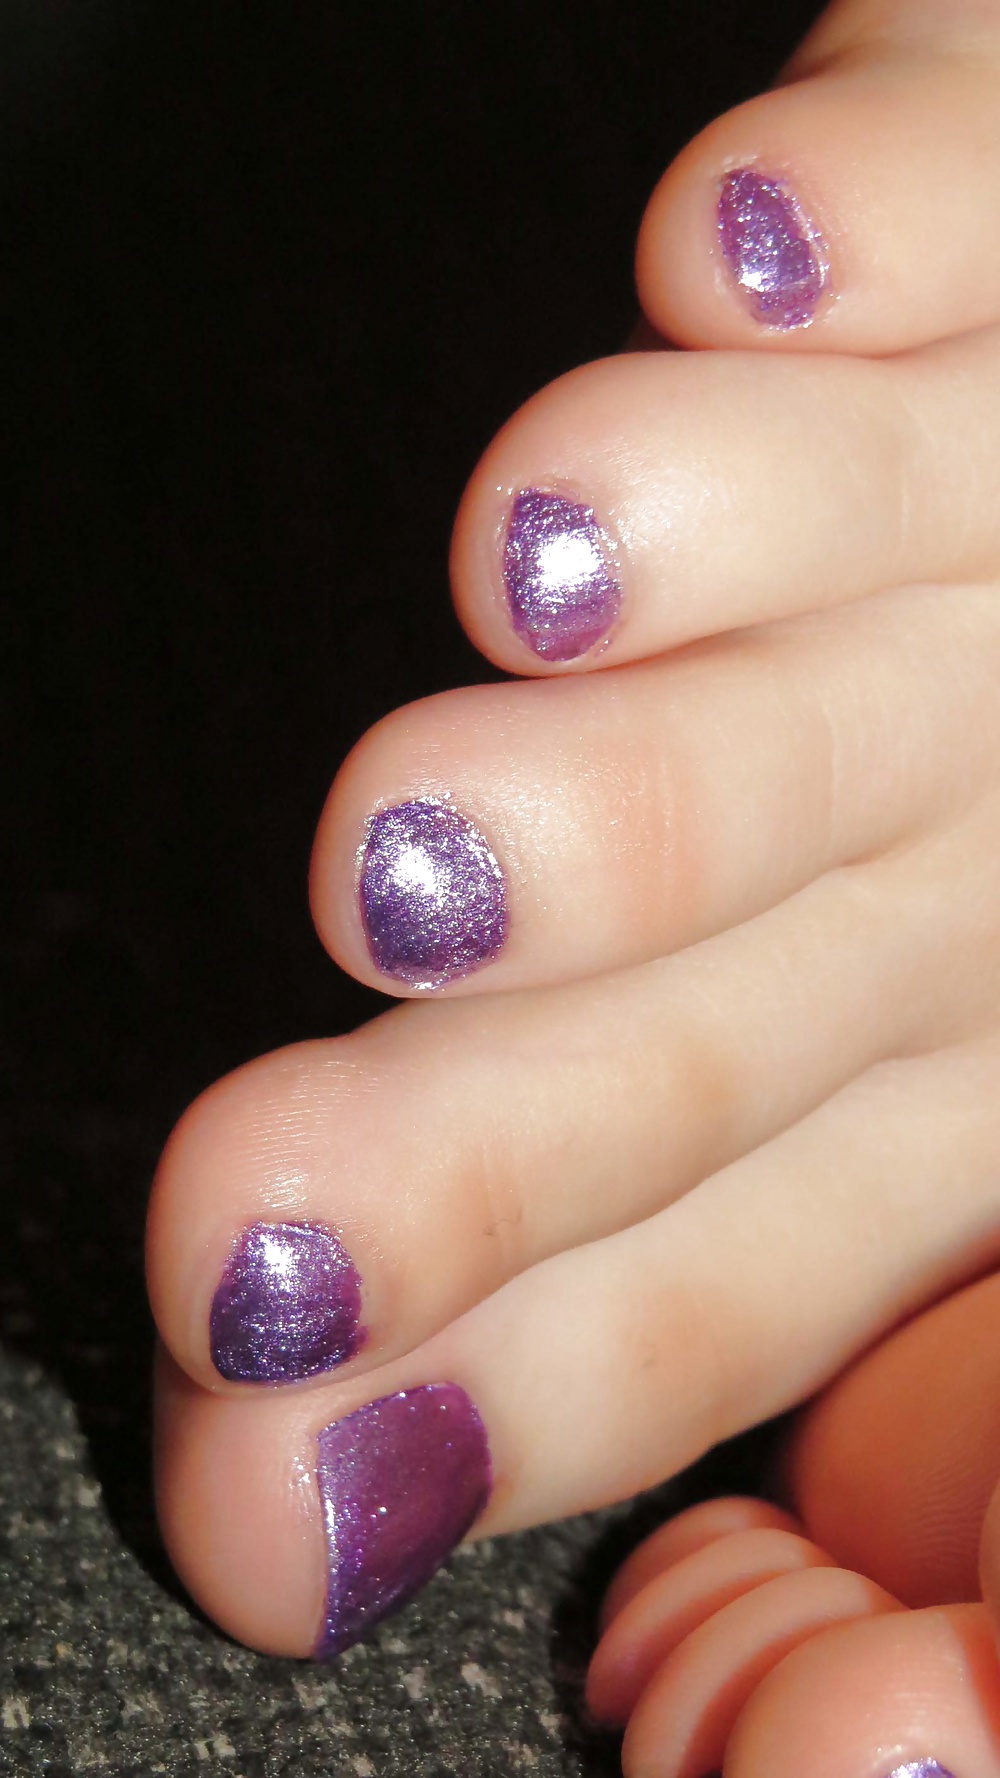 Barefeet and purple nails #28949346